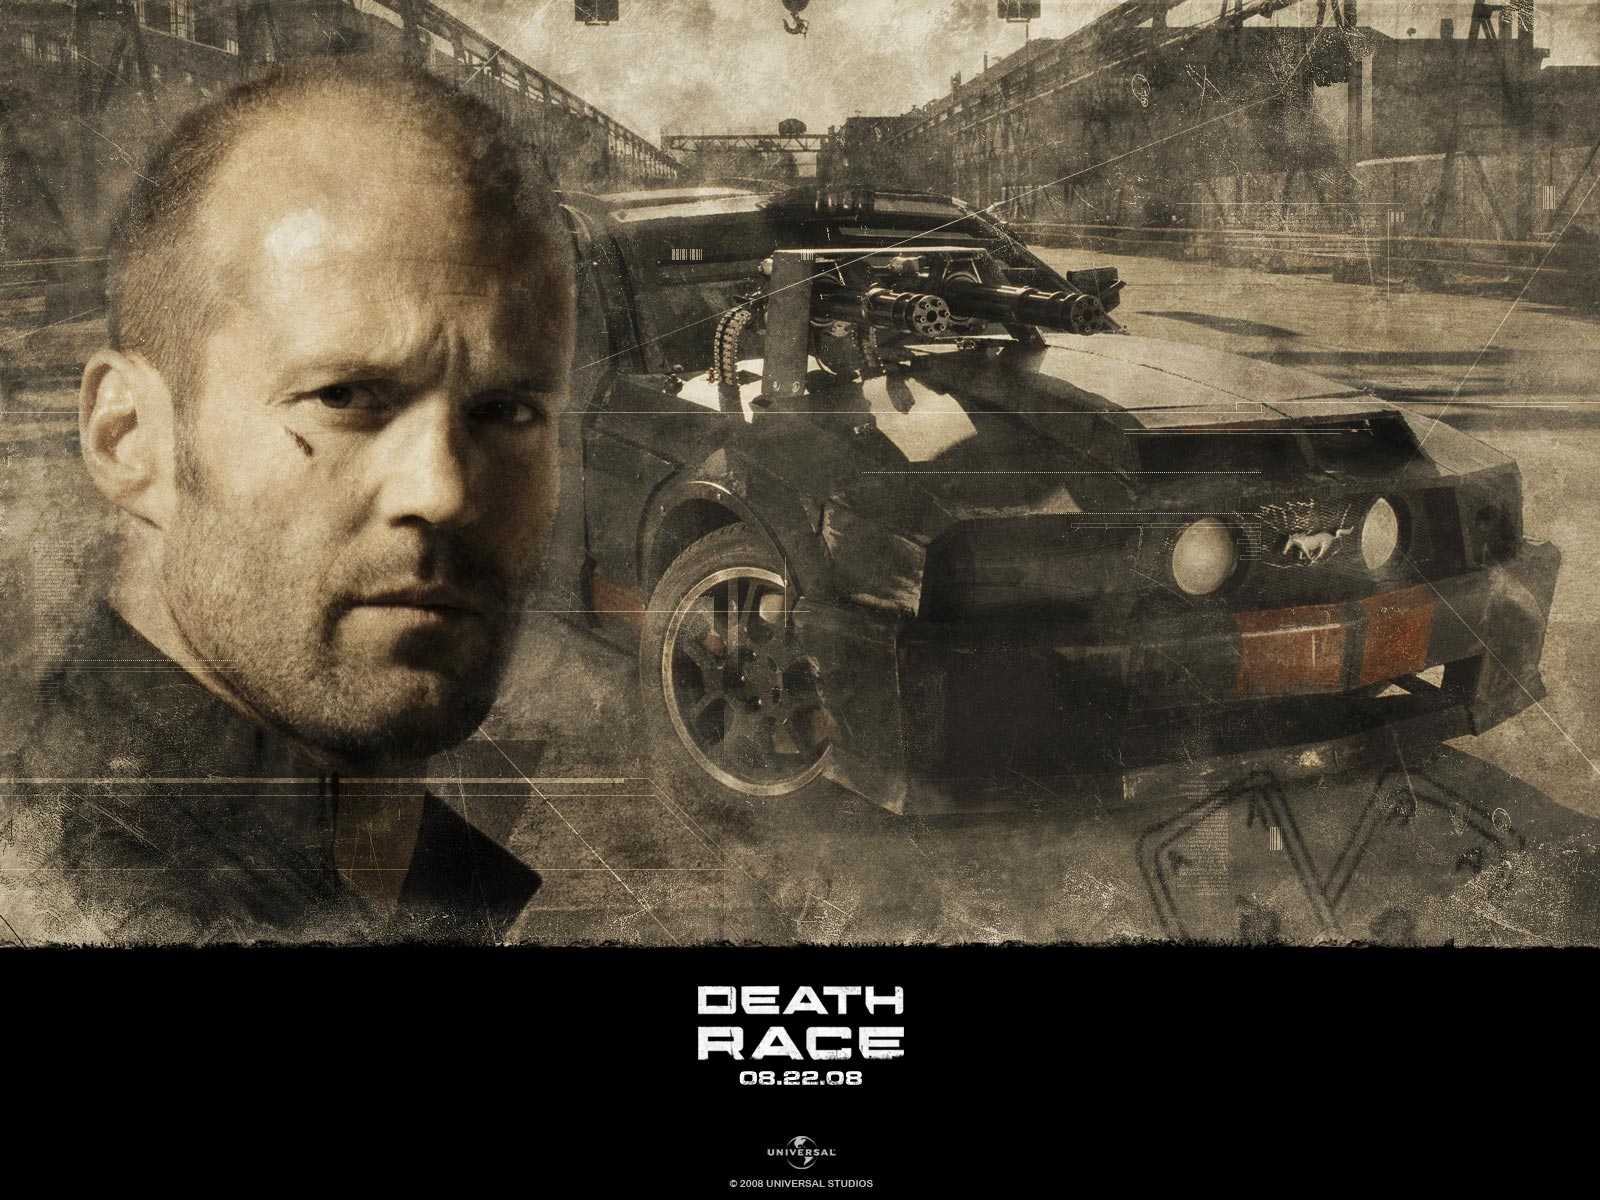 Jason Statham Death Race. High Definition Wallpaper, High